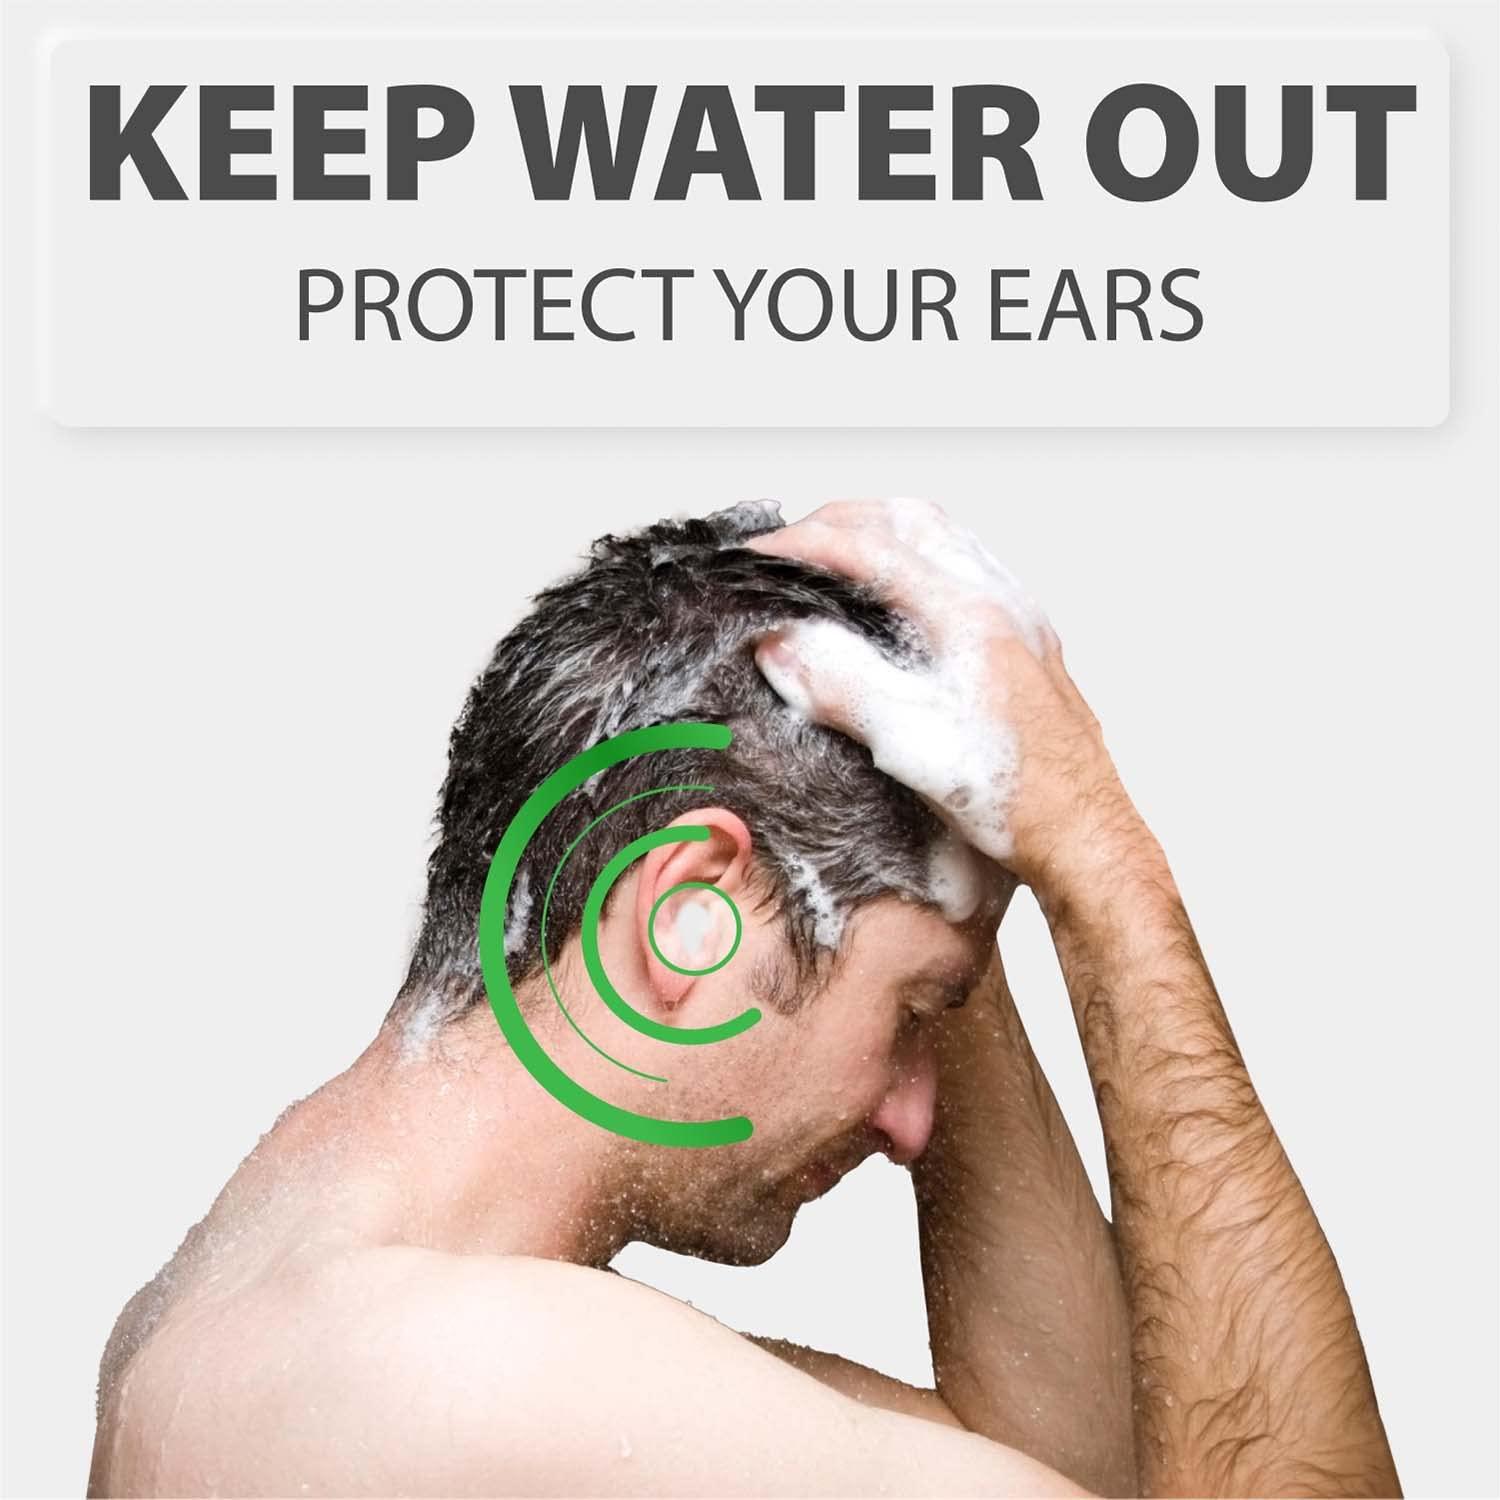 PQ Wax Ear Plugs for Sleep - 15 Silicone Wax Earplugs for Sleeping